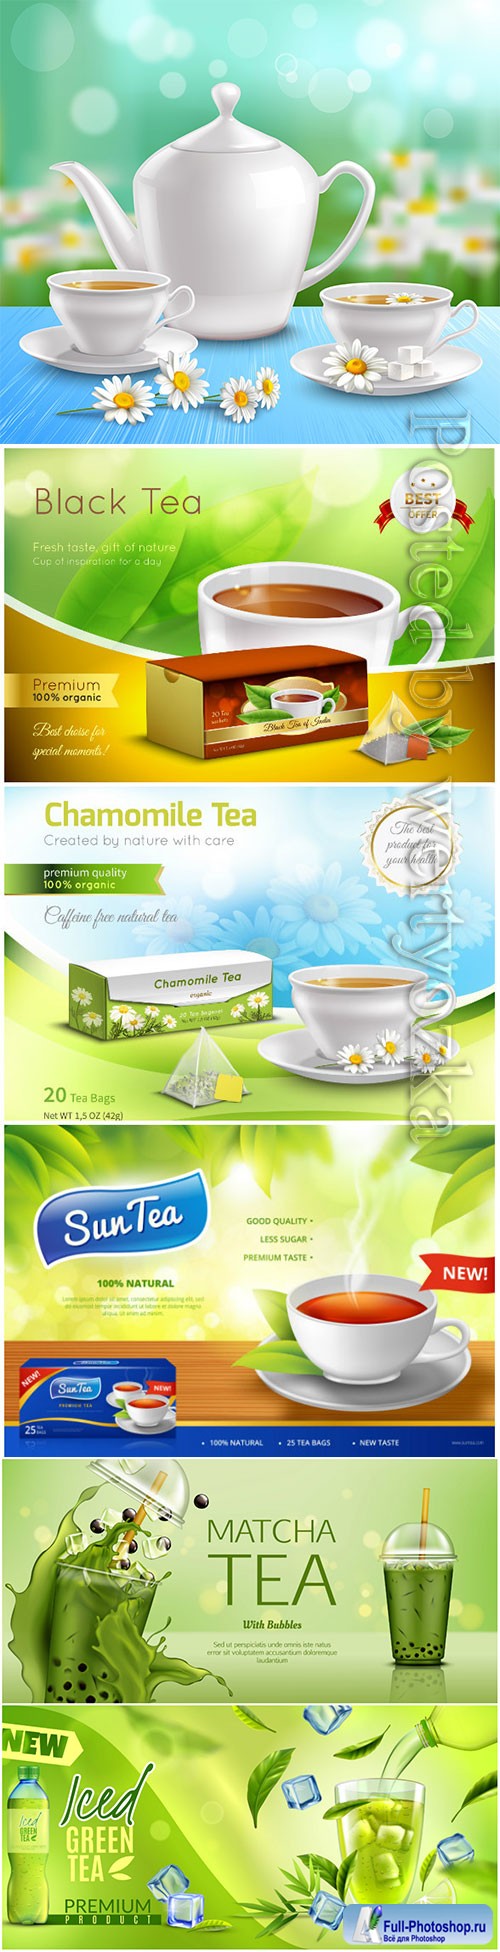 Realistic tea ad concept vector illustration